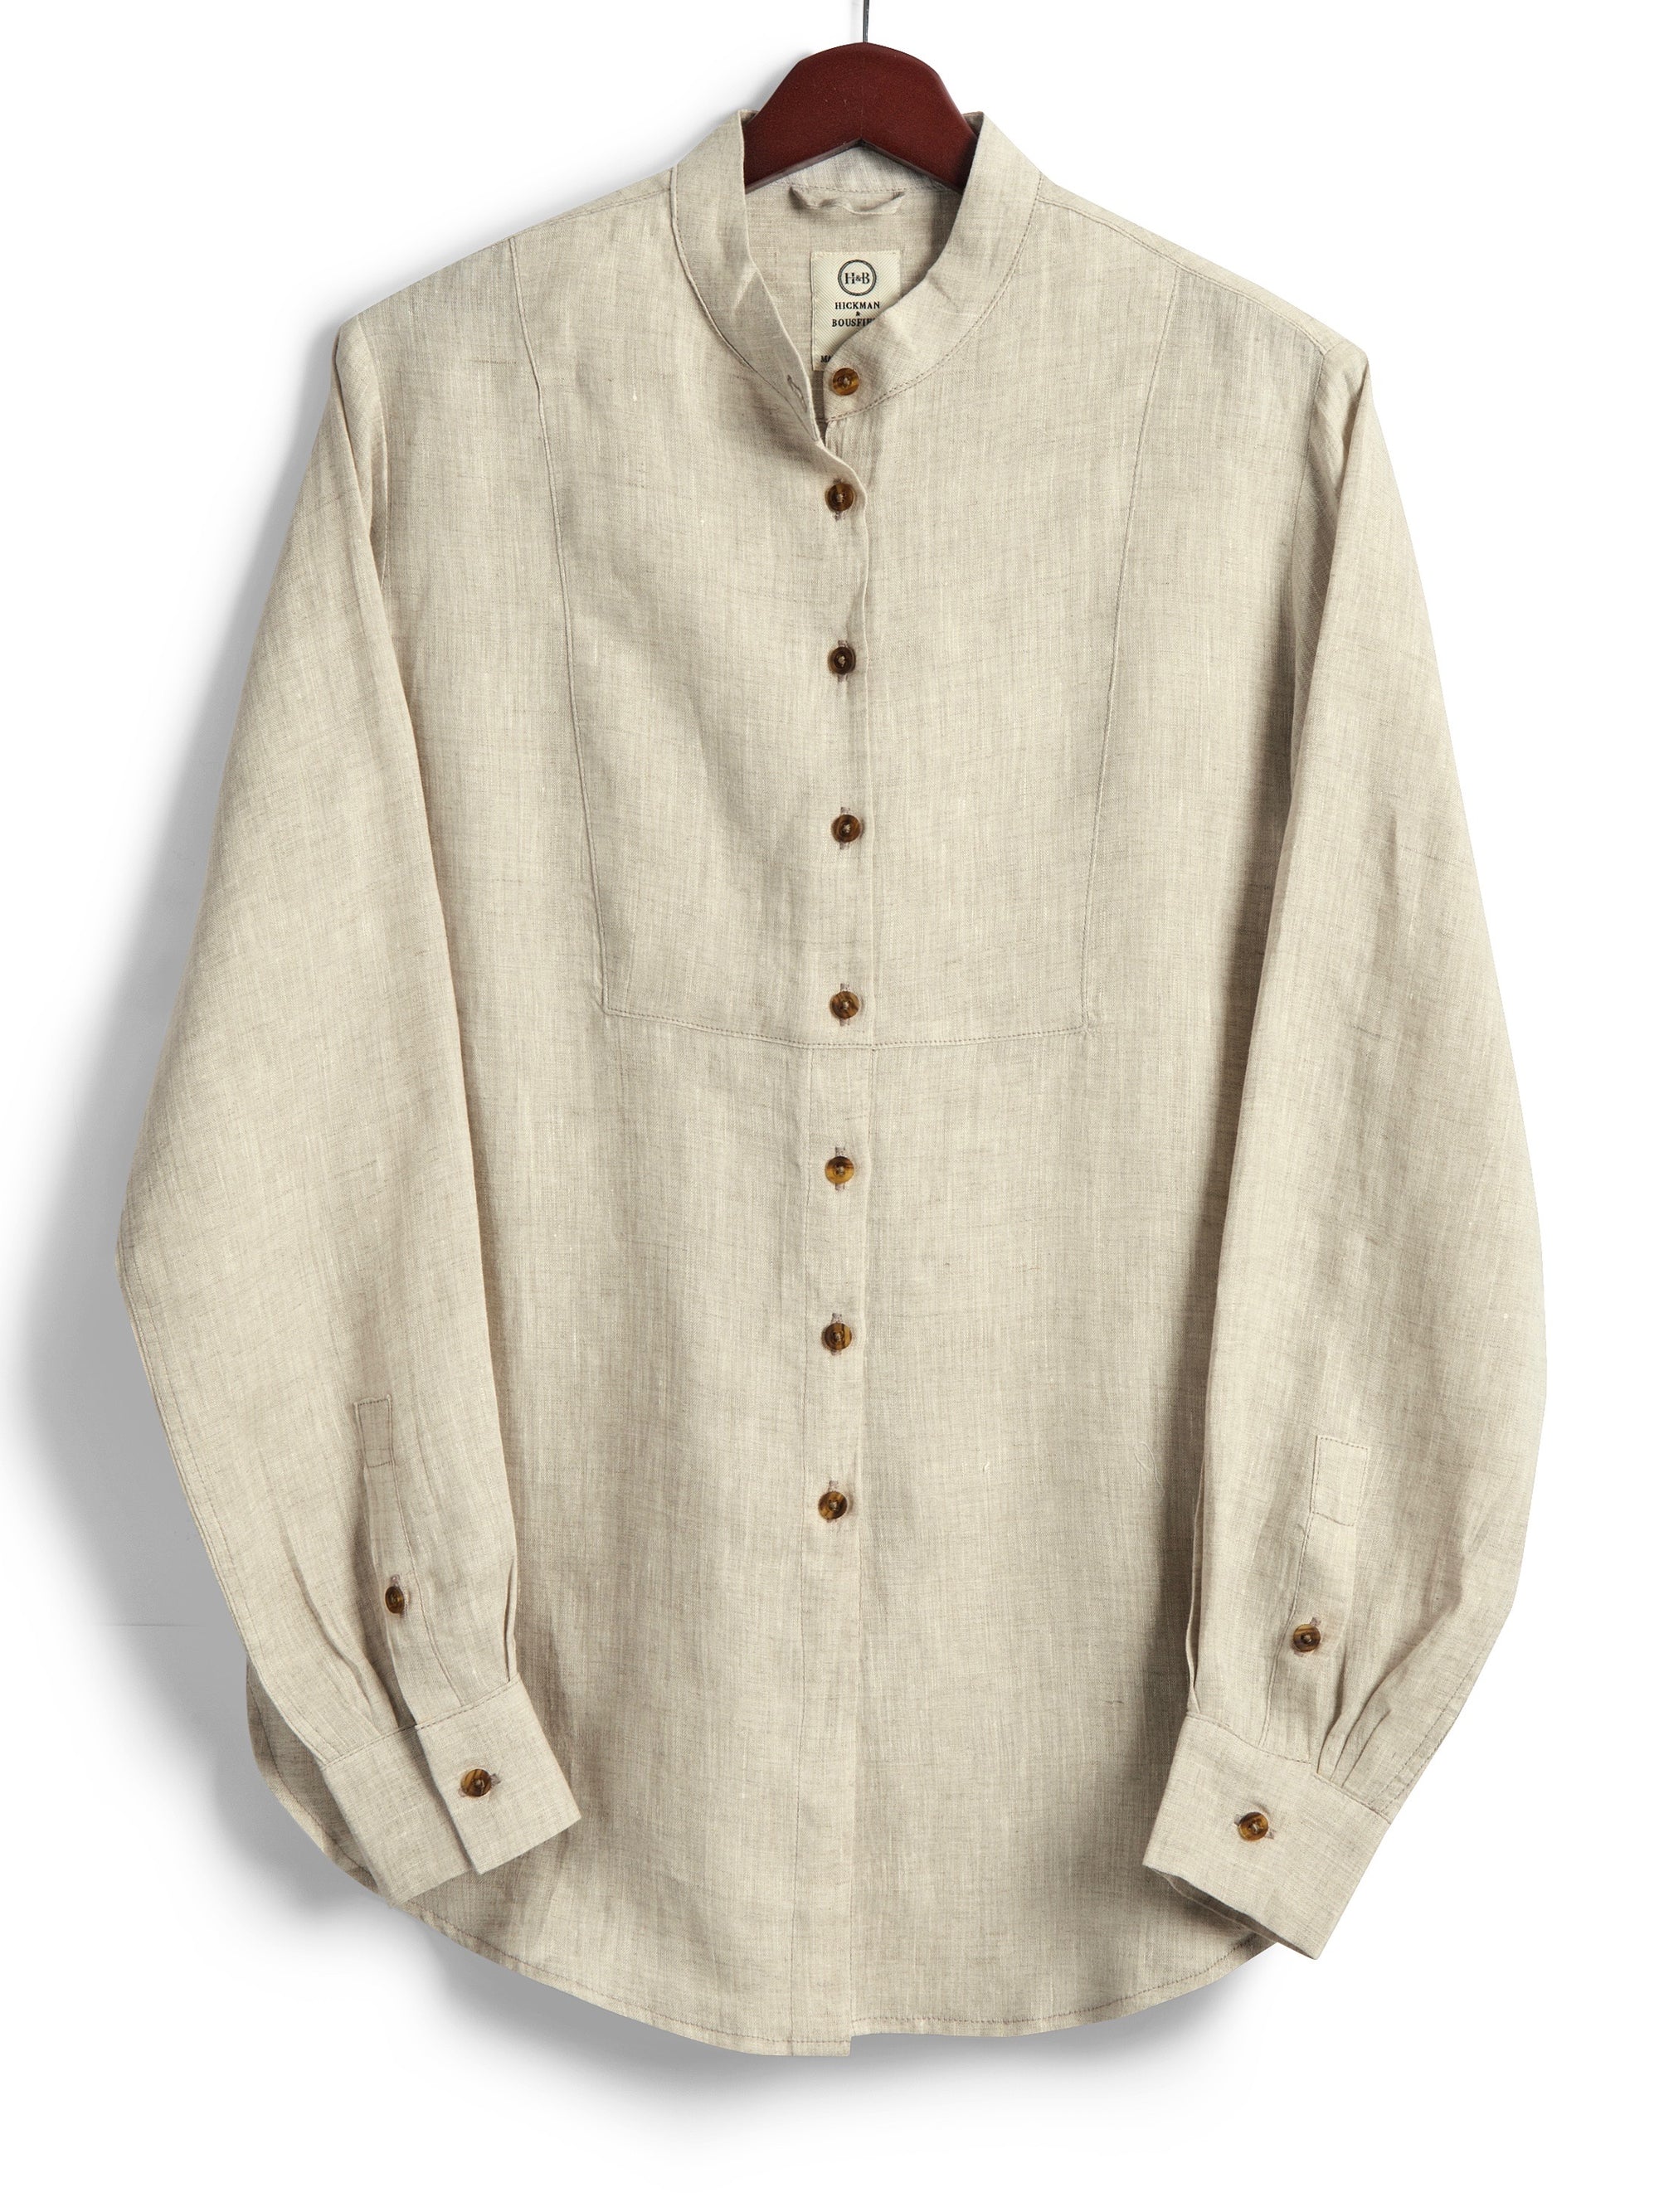 Bib Shirt, Natural Linen, Shirt, Hickman & Bousfield - Hickman & Bousfield, Safari and Travel Clothing